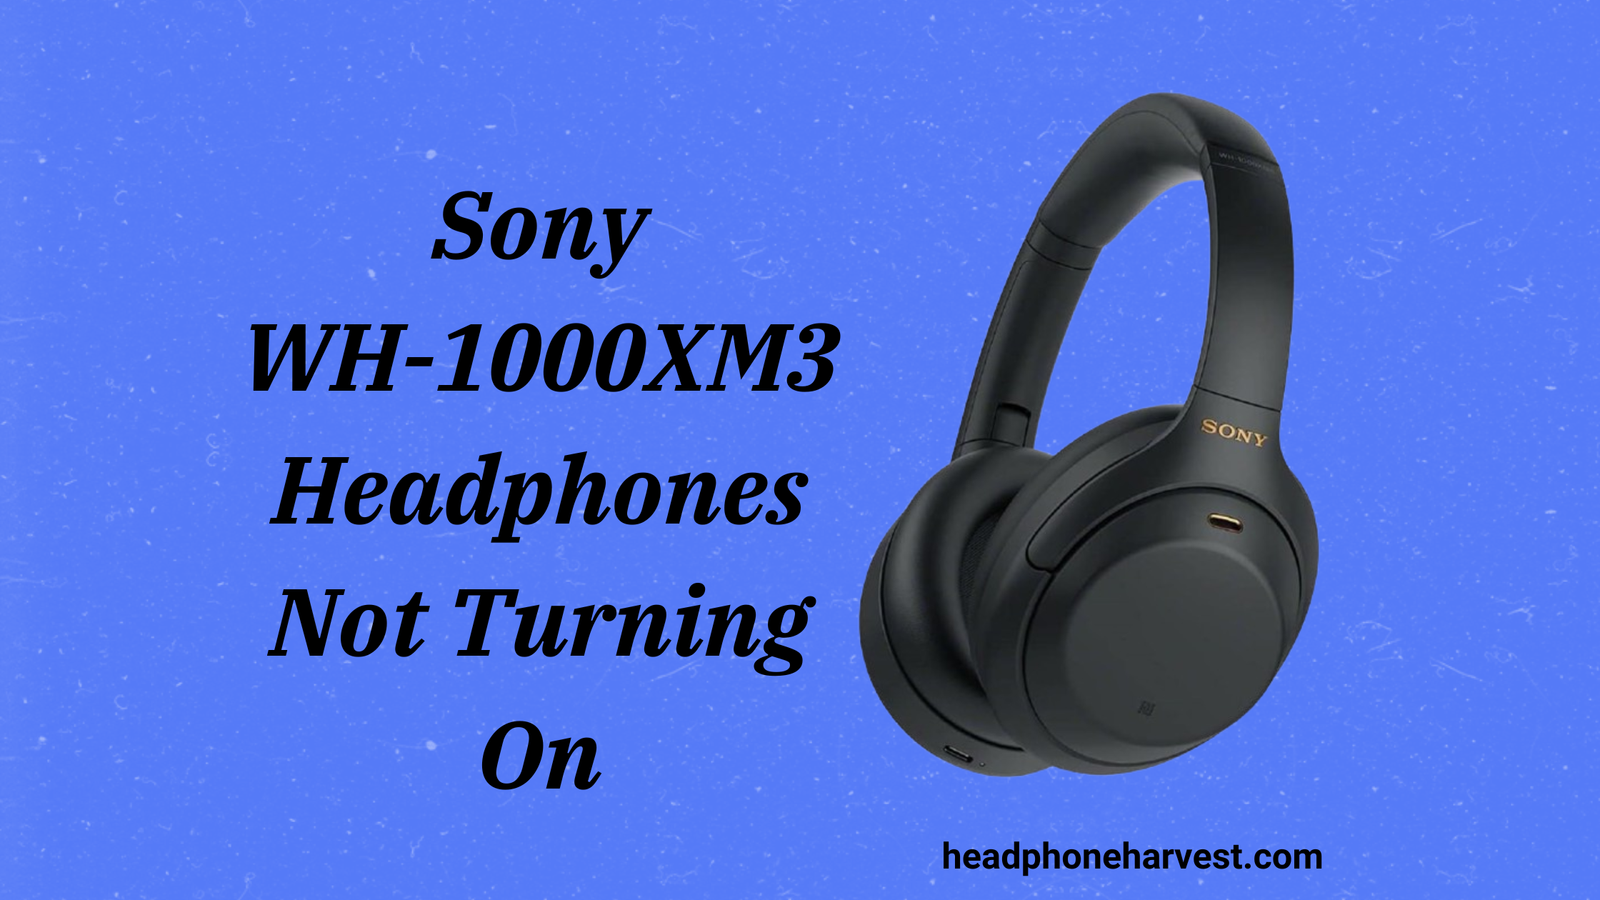 Sony WH-1000XM3 Headphones Not Turning On